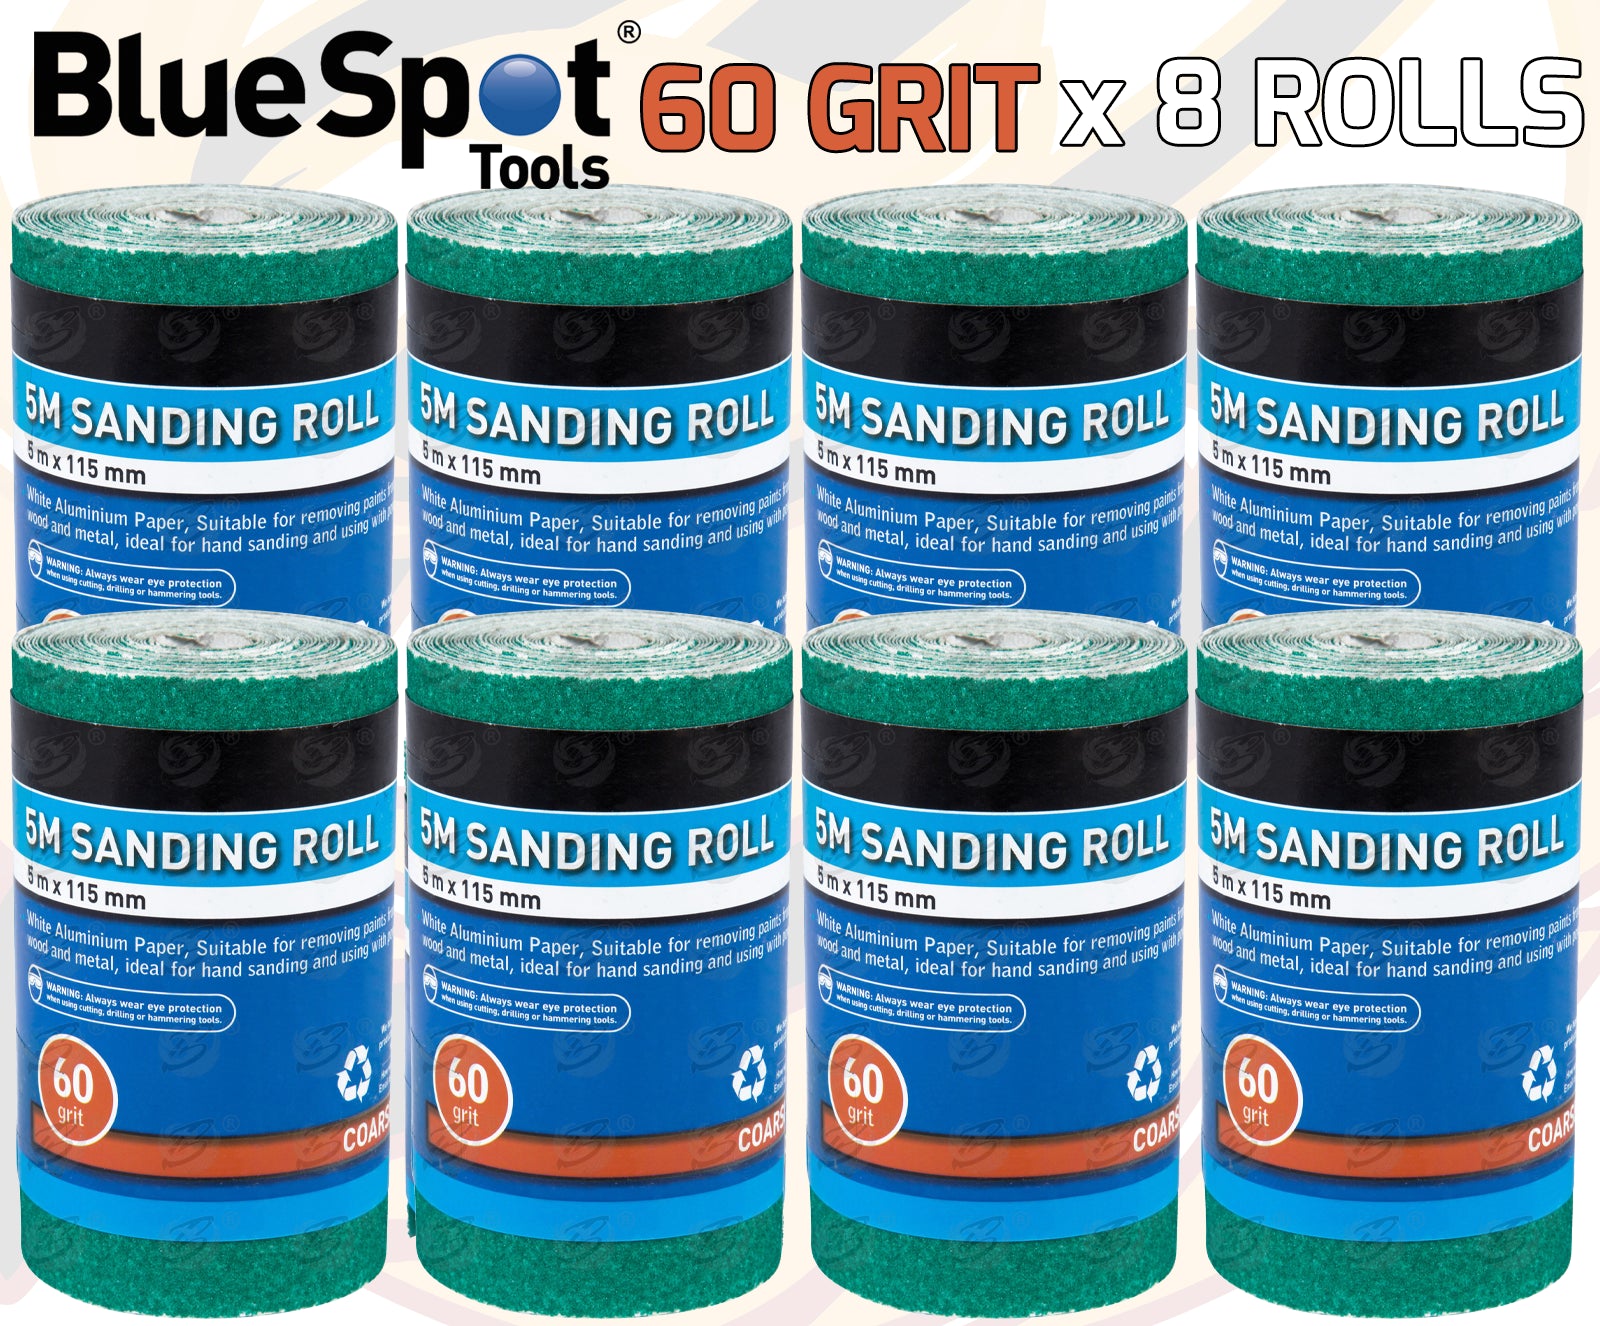 BLUESPOT 60 GRIT SANDING ROLL ( 5M x 115MM ) ( 8 ROLLS )